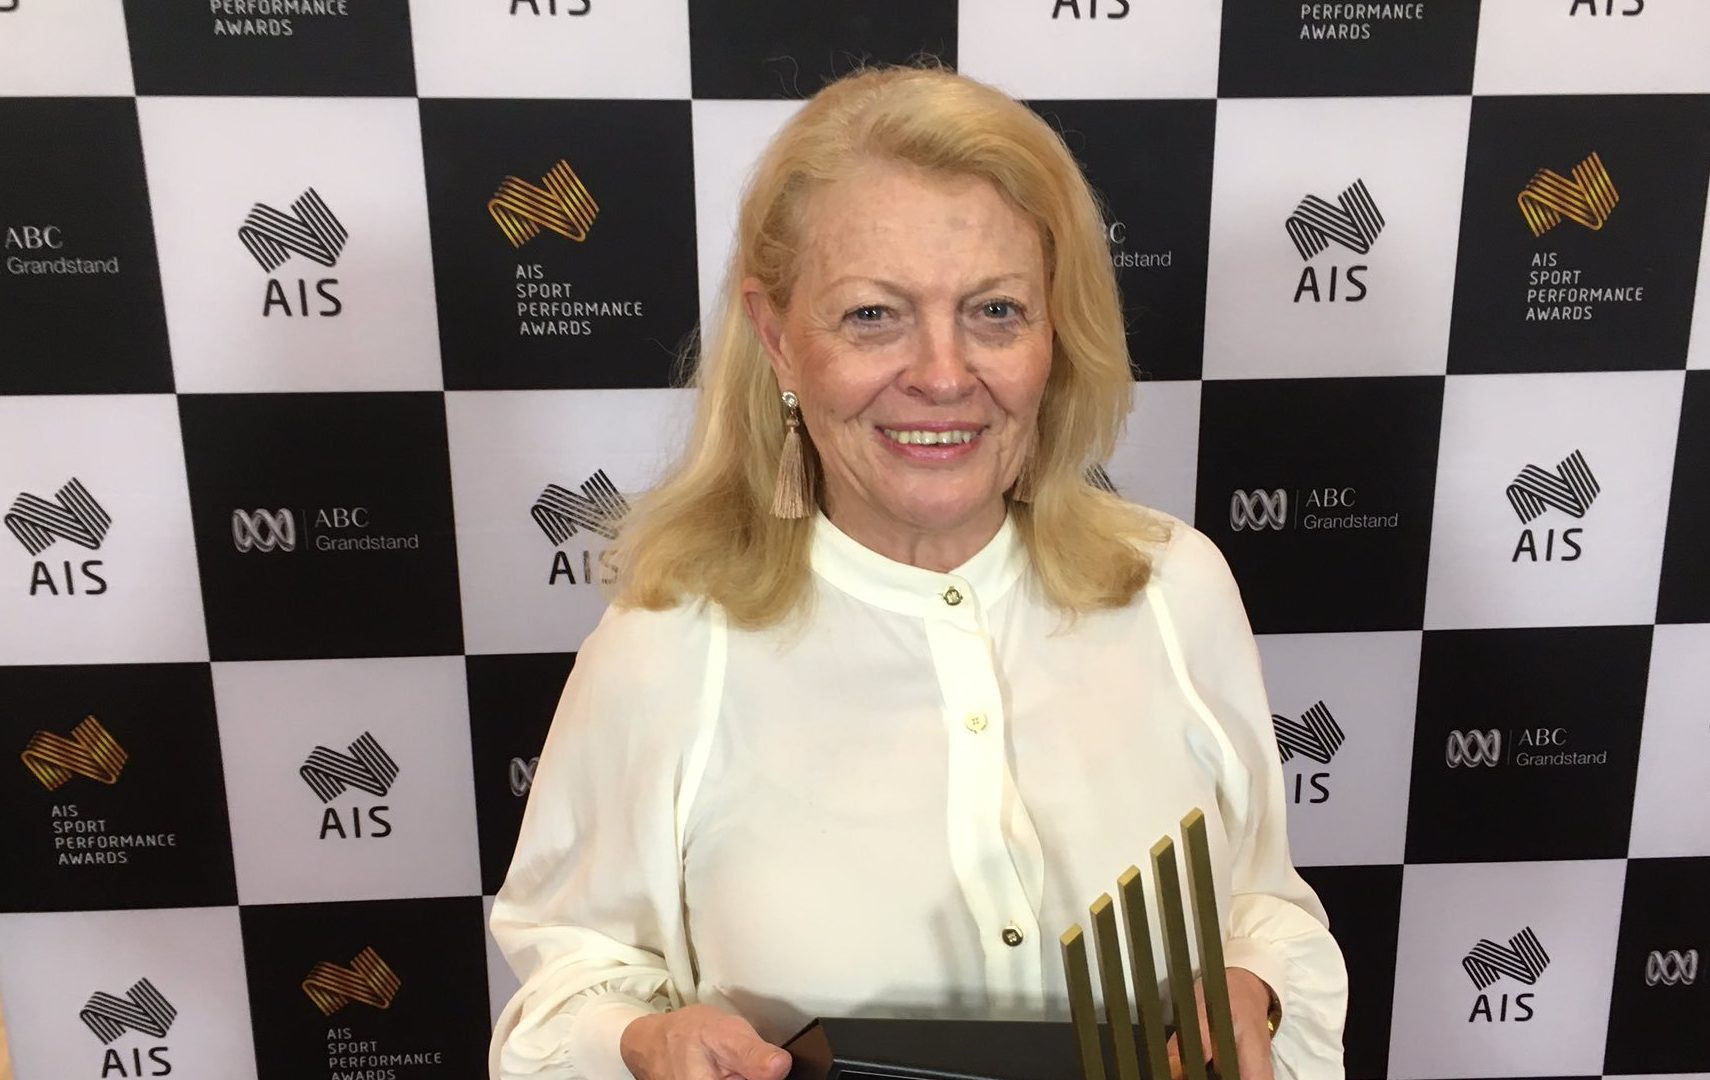 Paralympics Australia chief executive Anderson wins AIS Award for Leadership